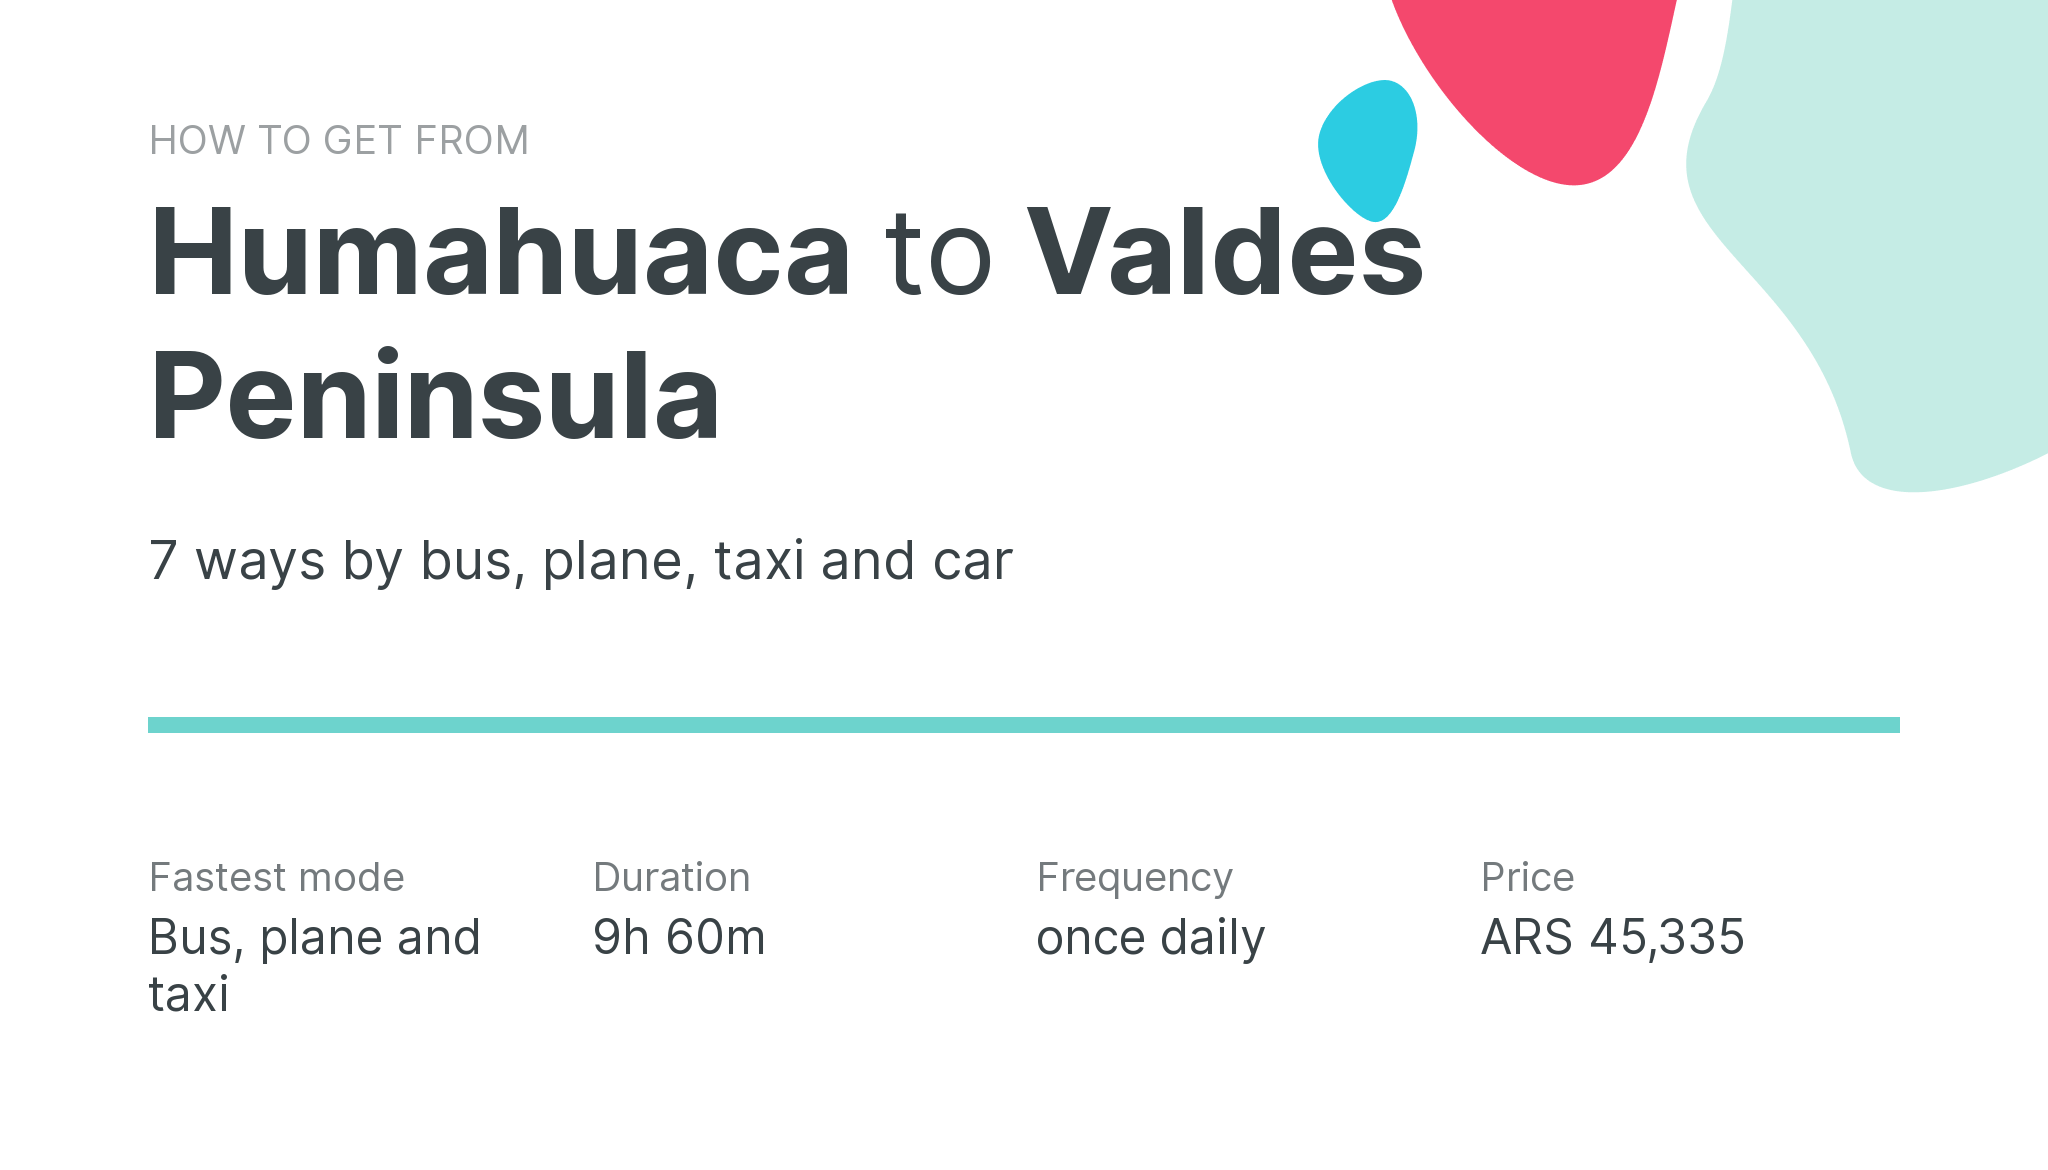 How do I get from Humahuaca to Valdes Peninsula